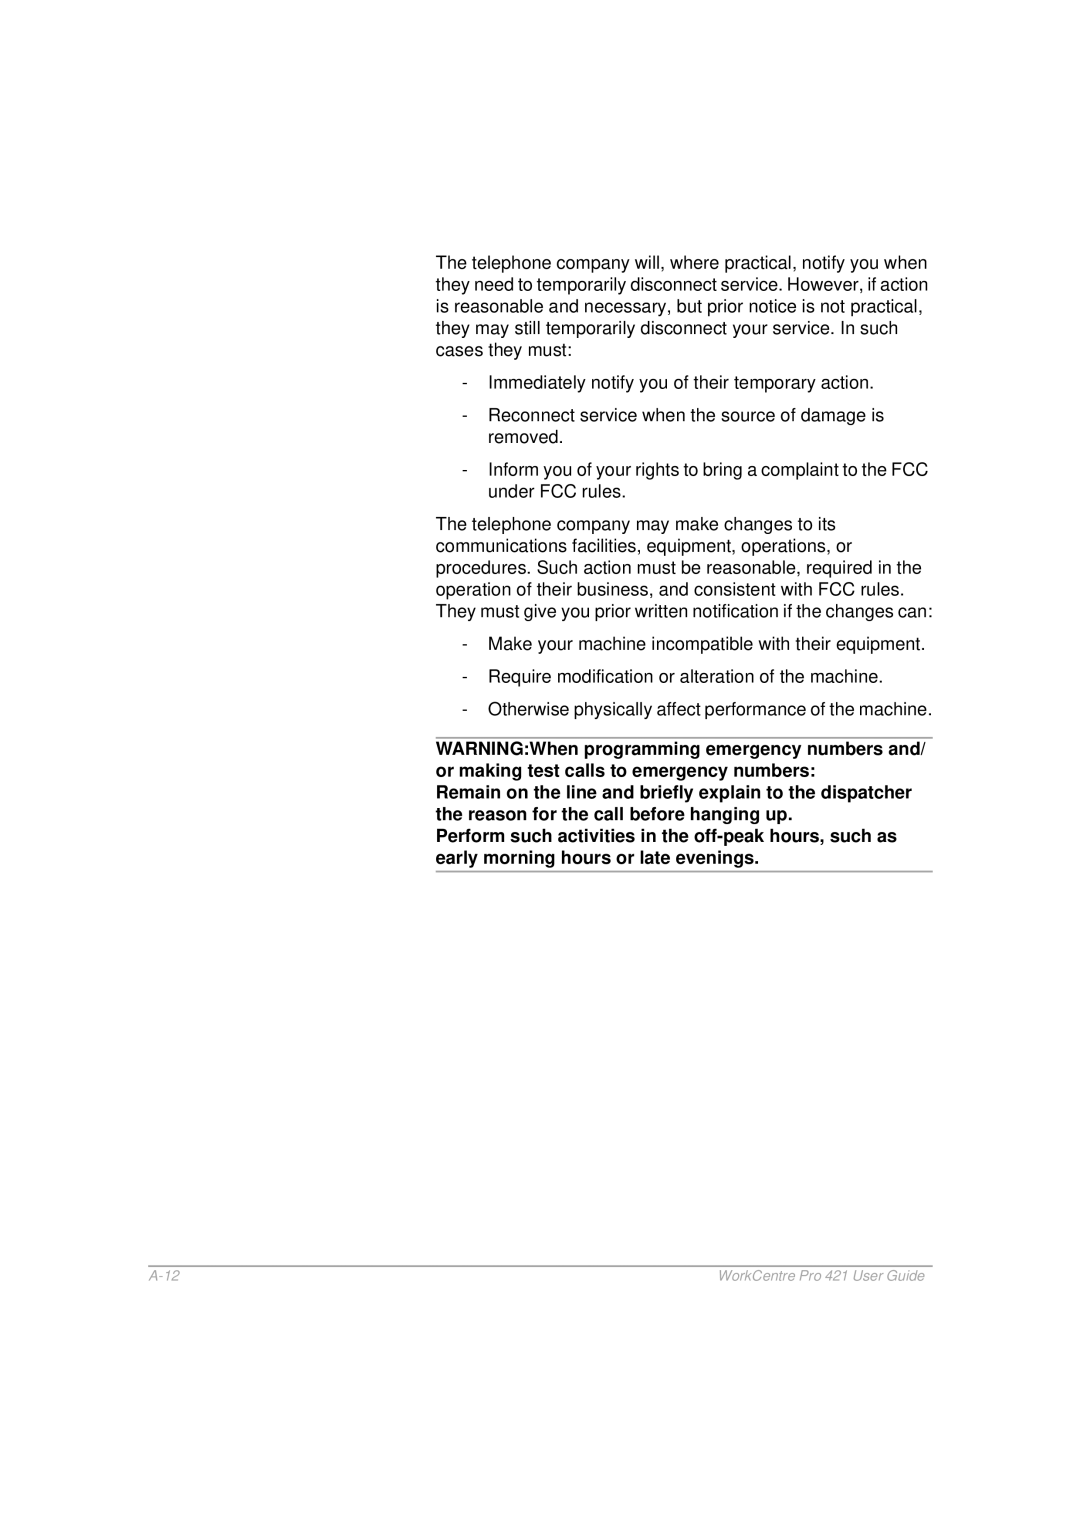 Xerox manual WorkCentre Pro 421 User Guide 